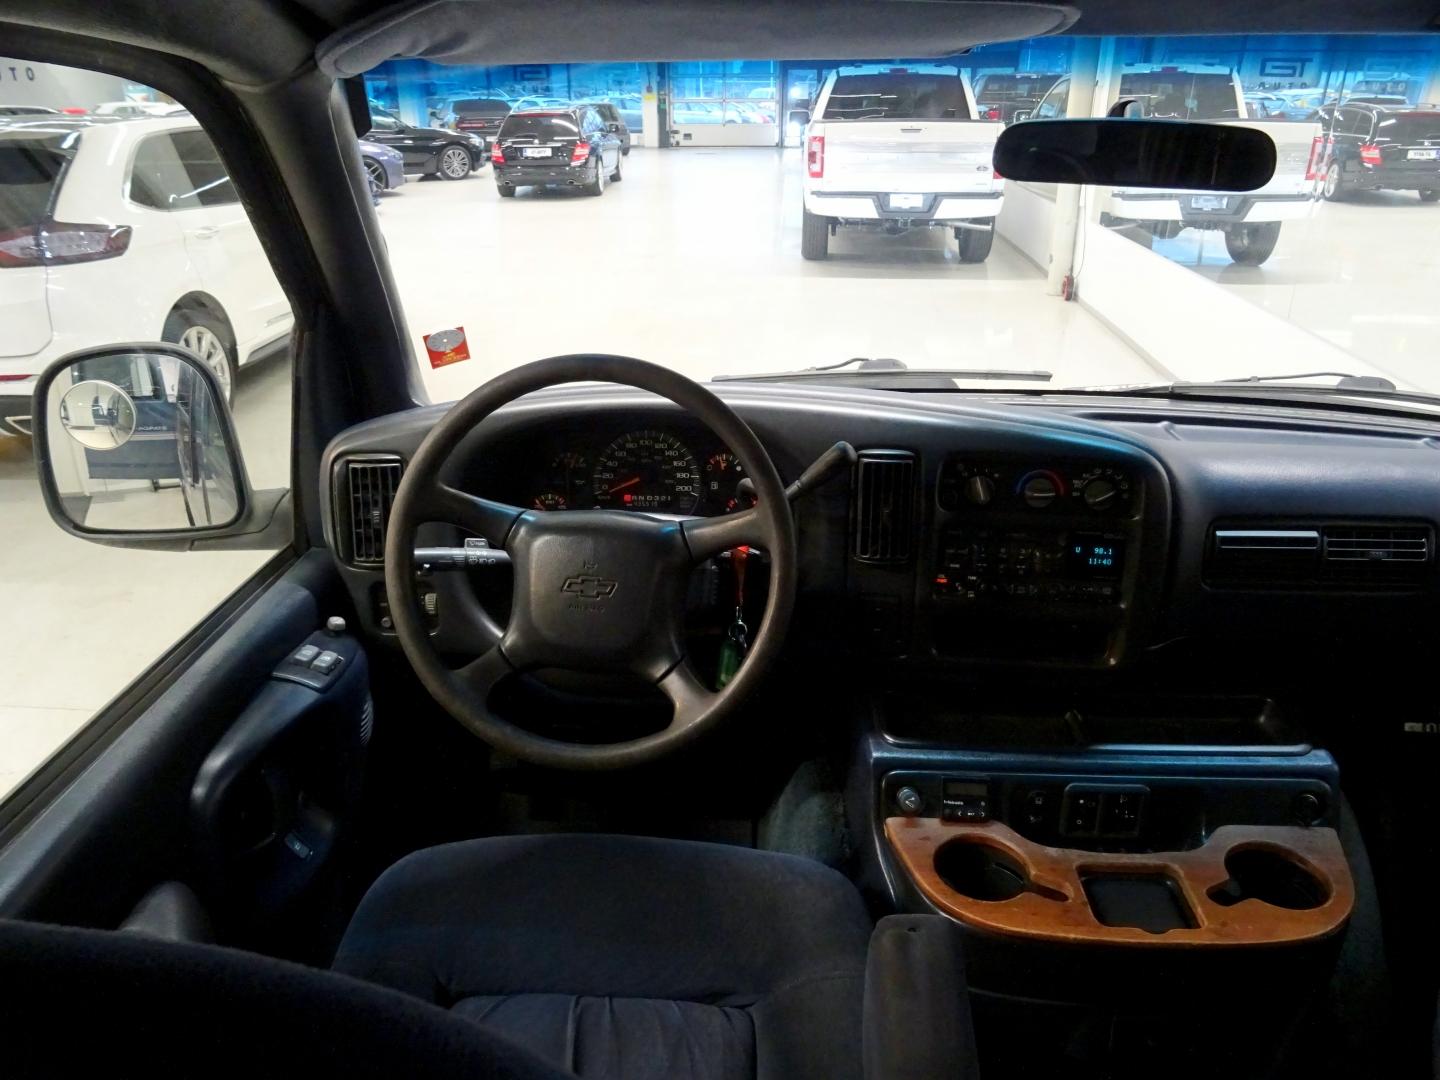 Chevrolet Chevy Van